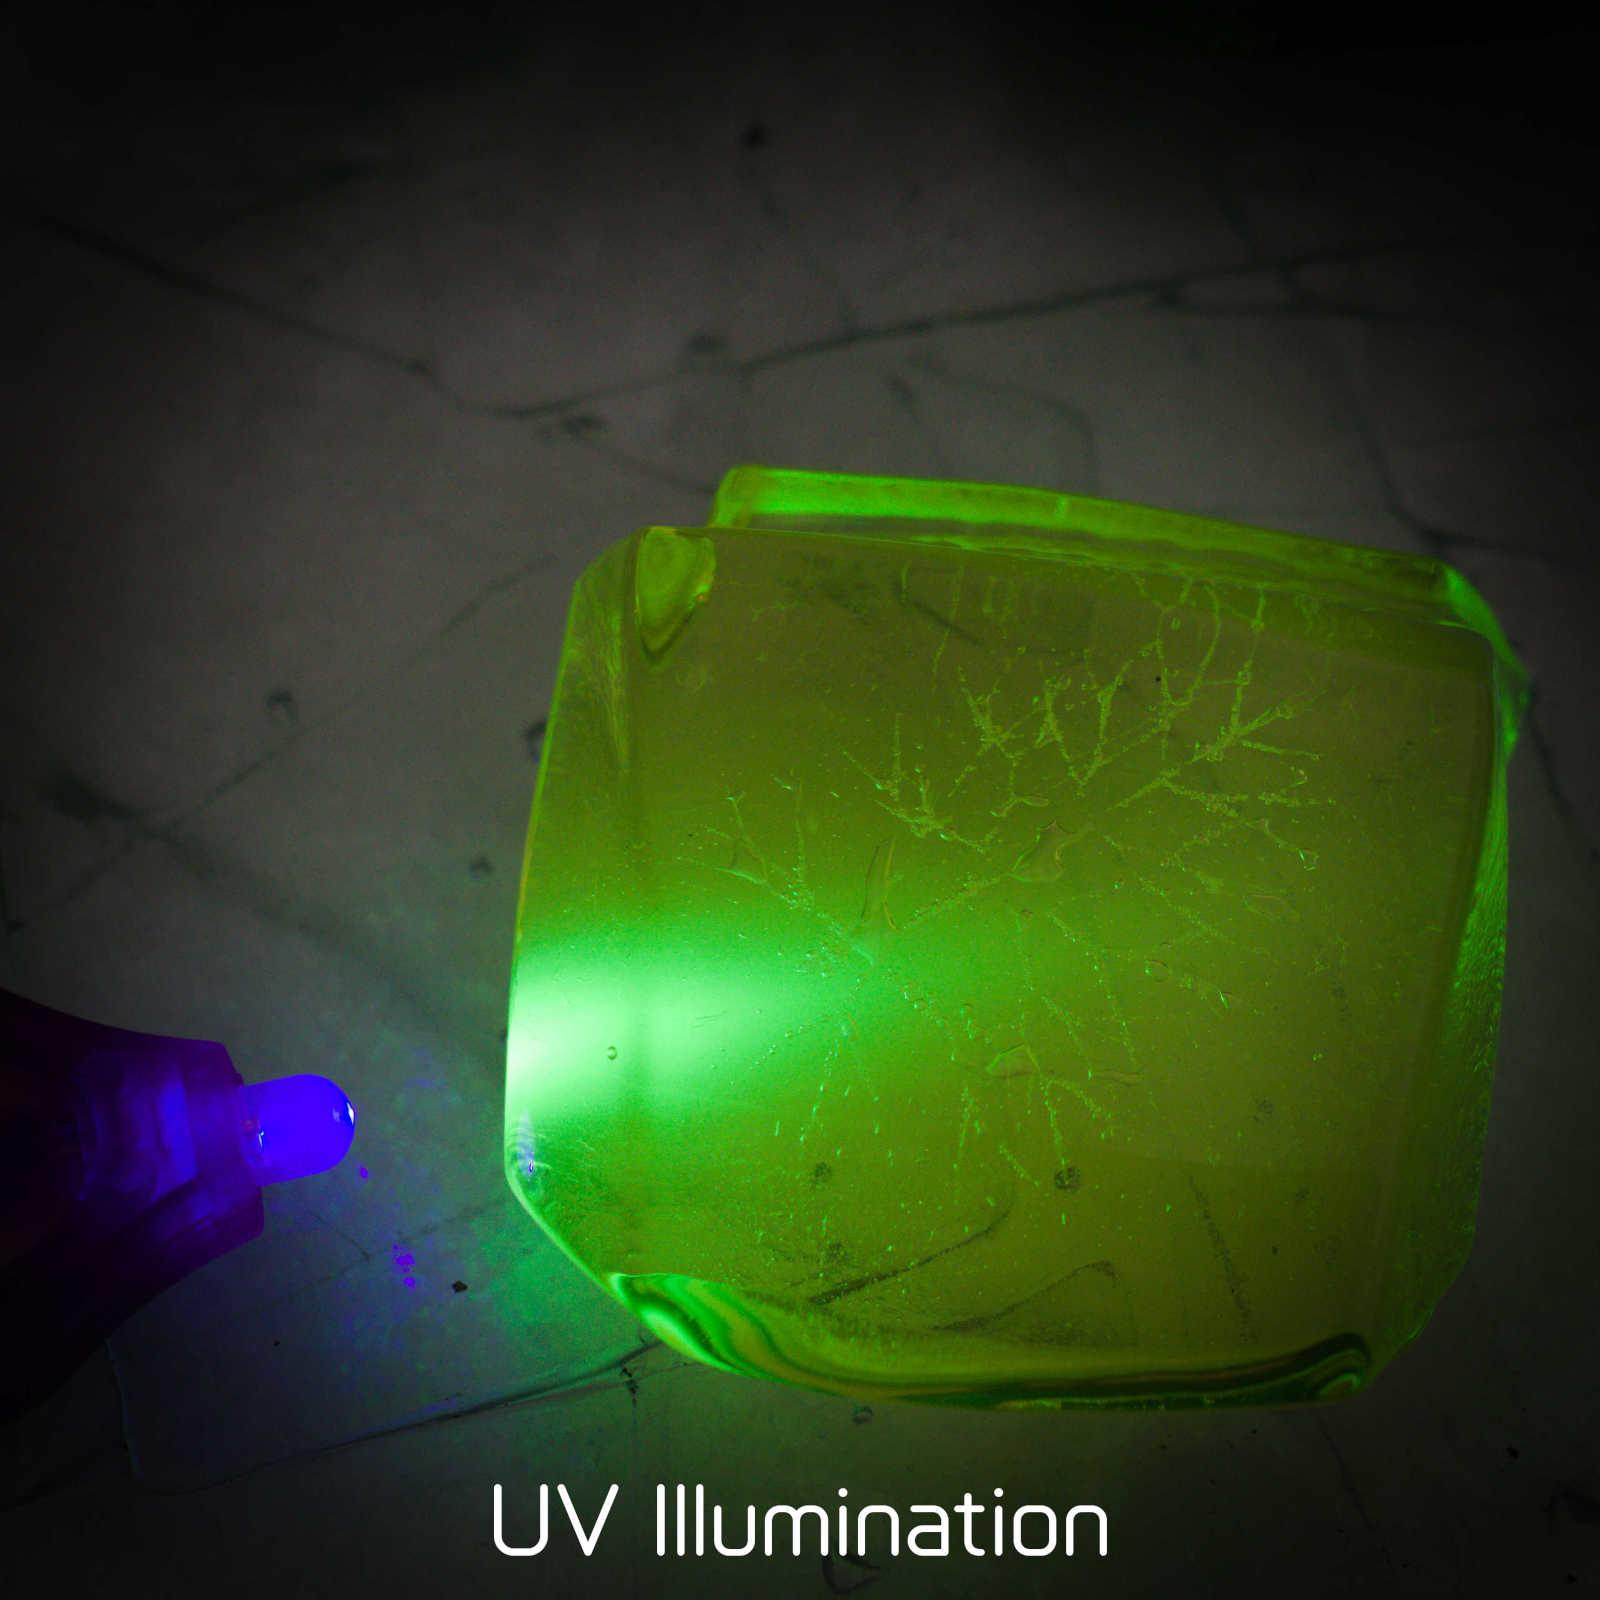 Uranium Glass with fennel leaf impression under UV light